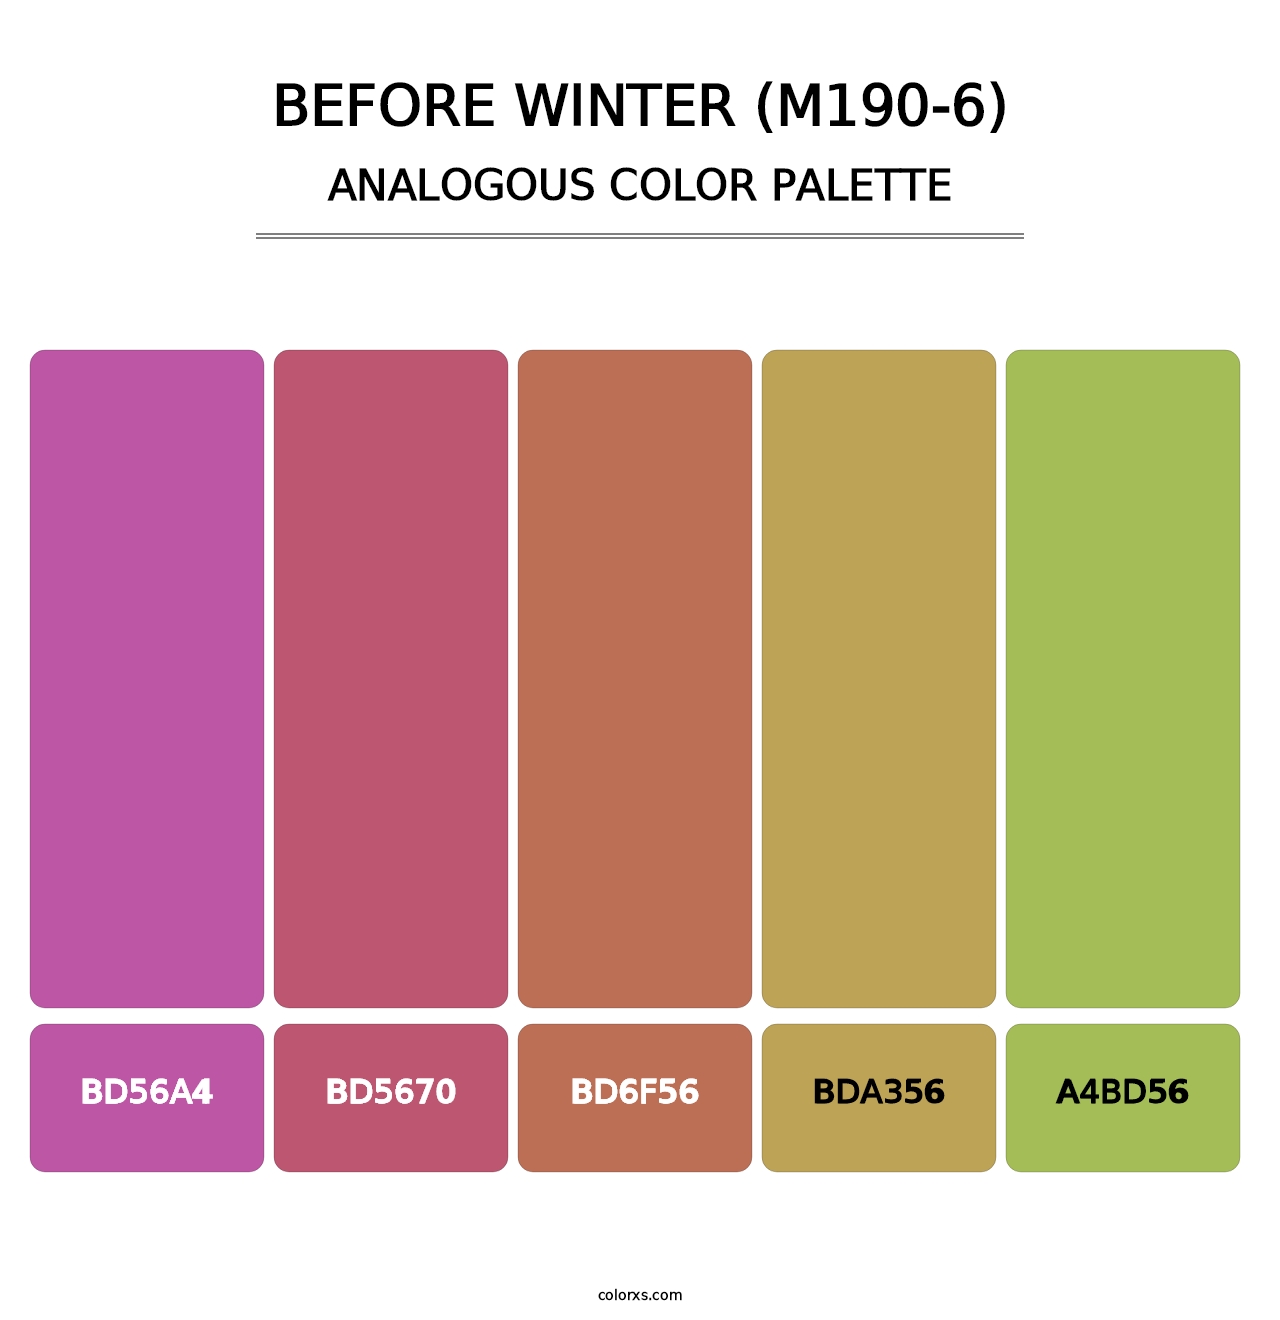 Before Winter (M190-6) - Analogous Color Palette